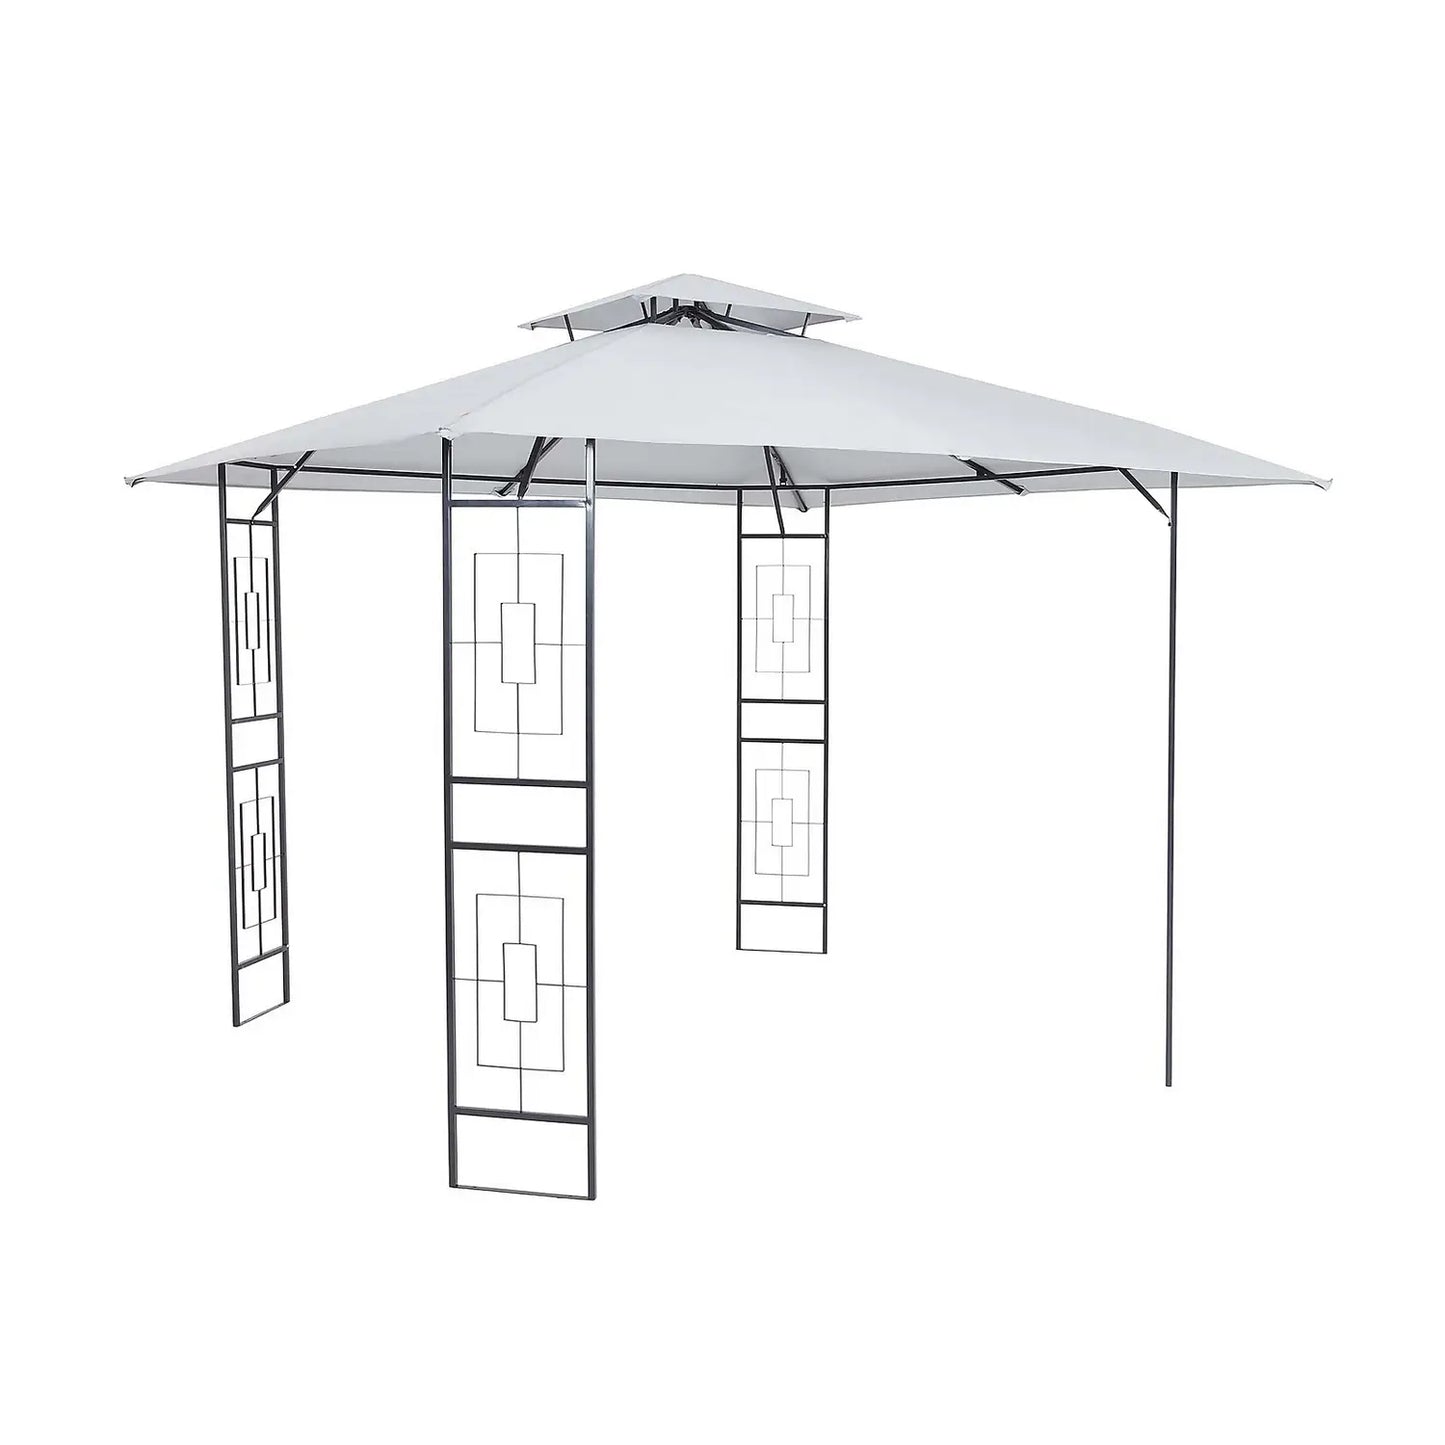 Canopy for 3m x 3m Homebase Ornate Panels Patio Gazebo - Two Tier